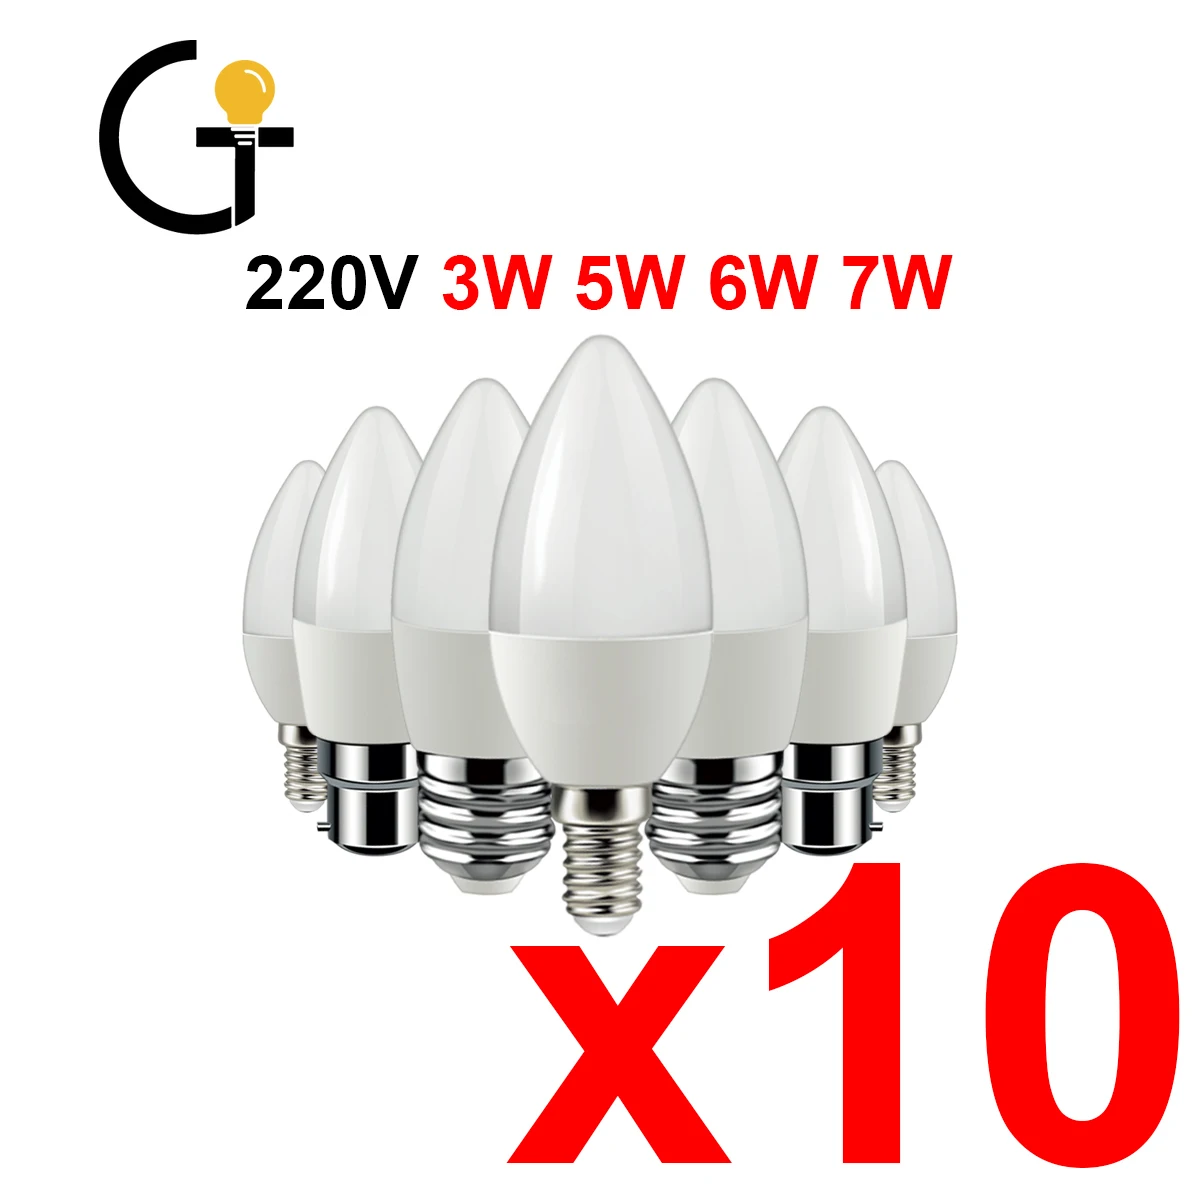 

10 Piece Led Candle Bulb C37 3w 5w 6w 7w Warm White Cold White Day Light B22 E14 E27 AC220v-240v 6000k For Home Decoration Lamp